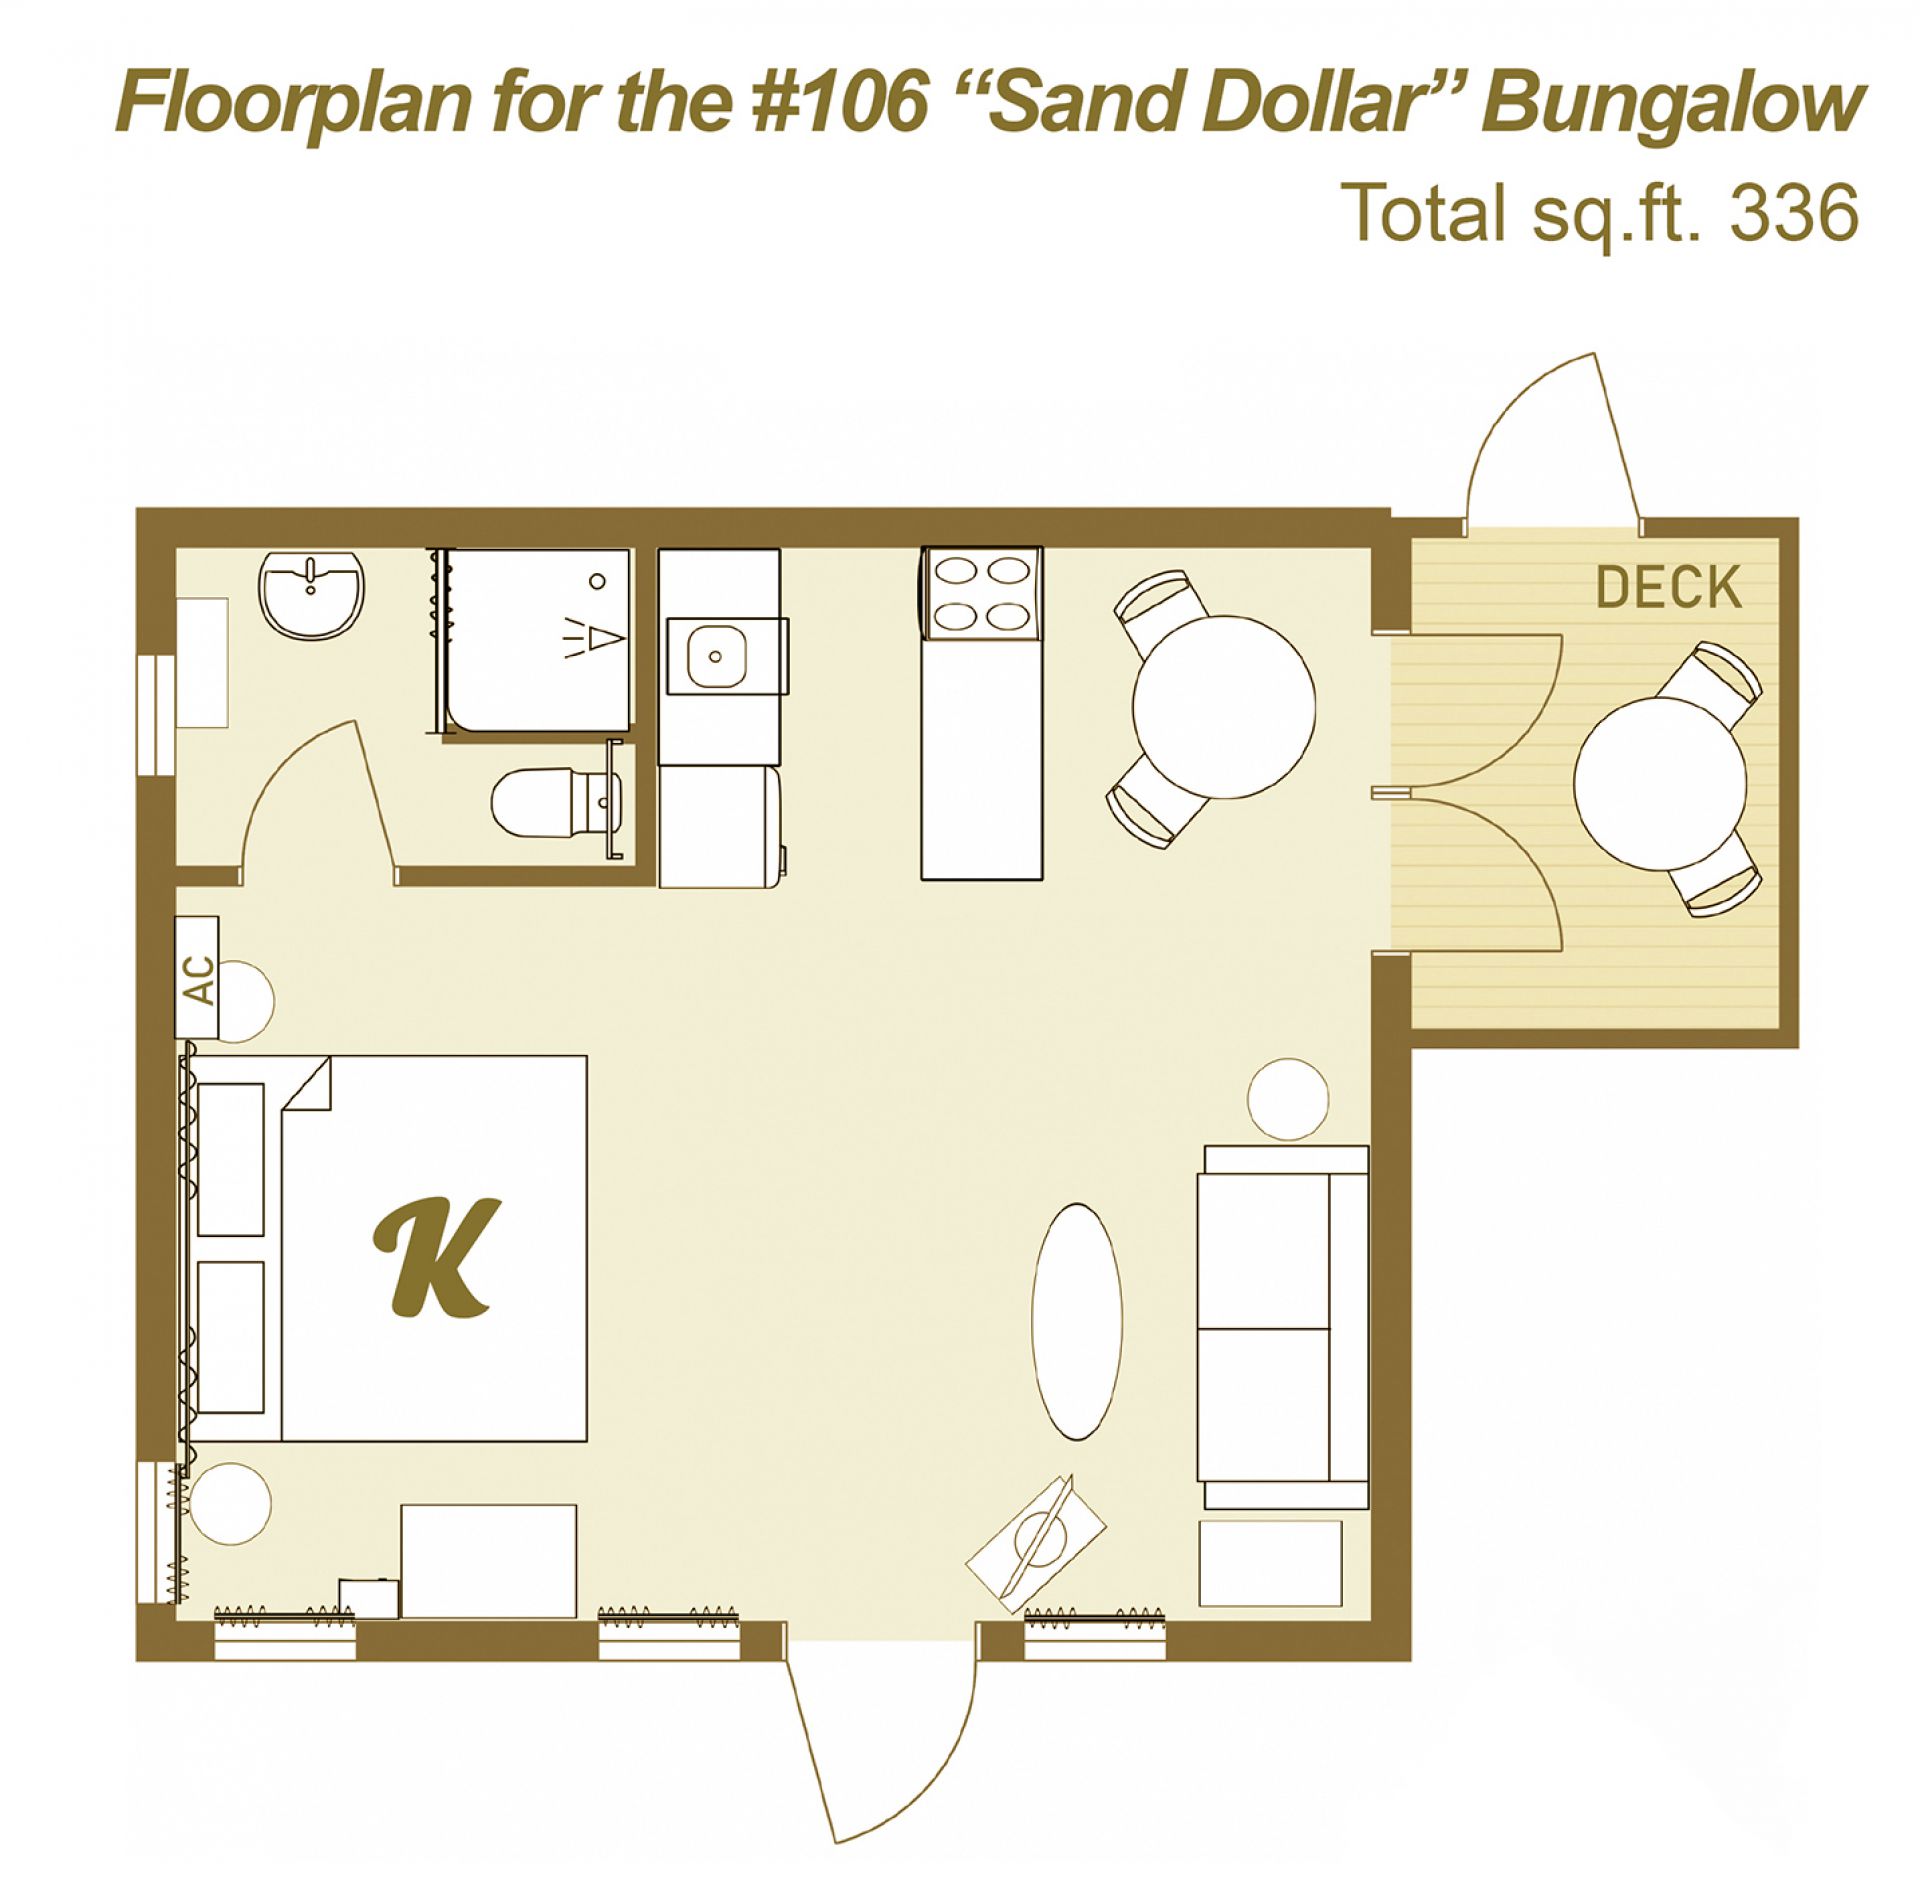 Floor plan for Sand Dollar Bungalow, #106 Bungalow